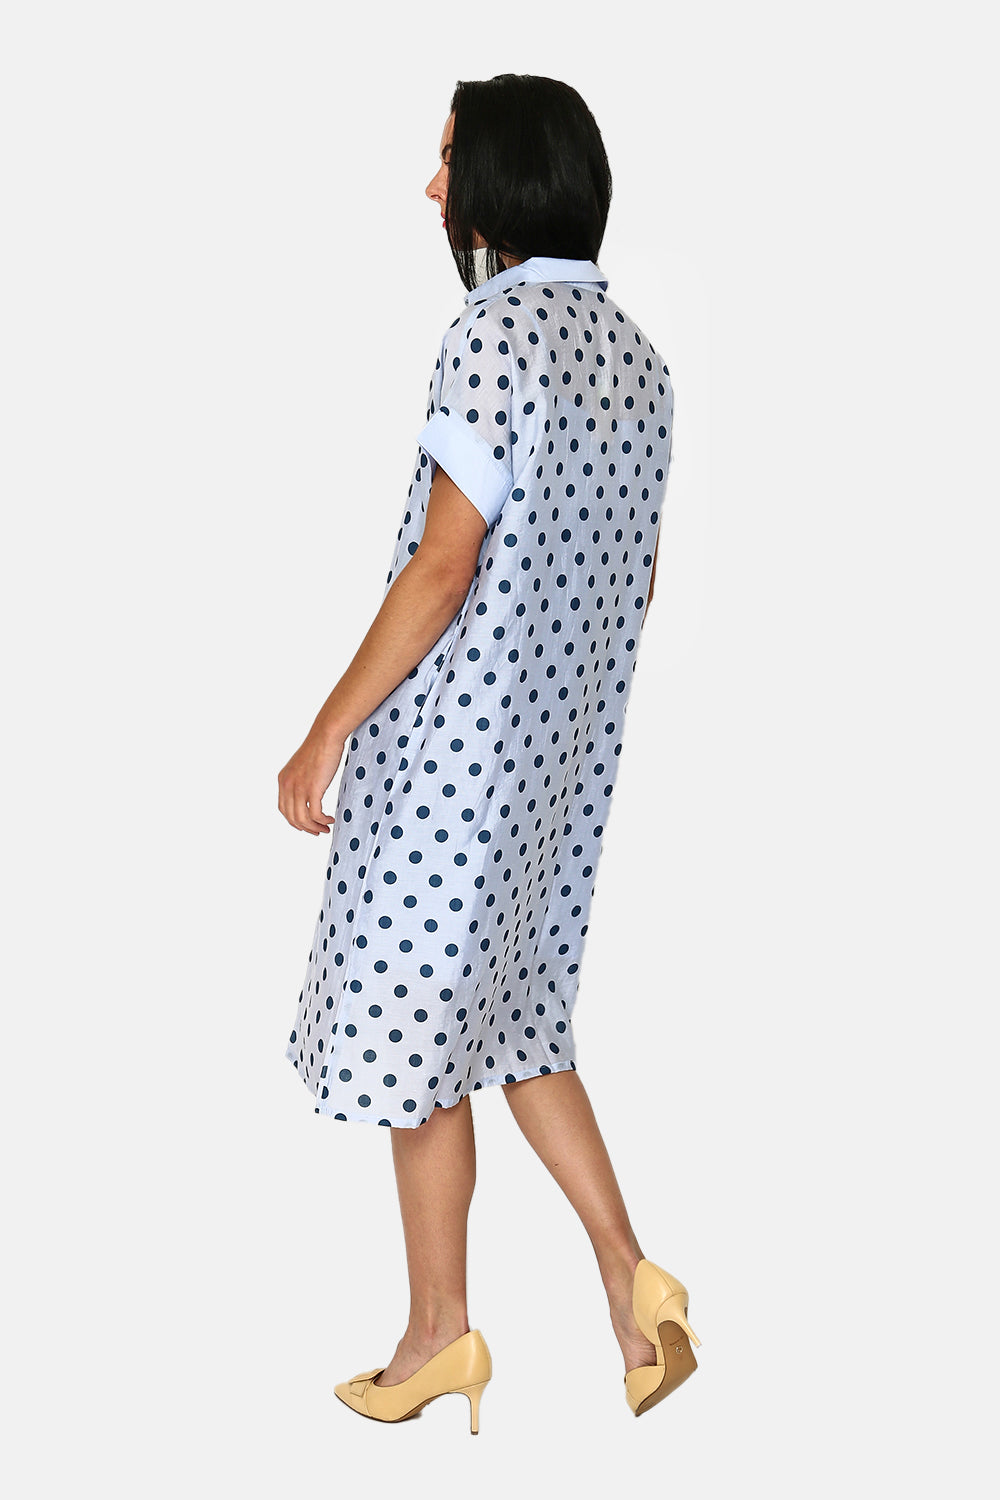 Polka dot print shirt dress + matching strap